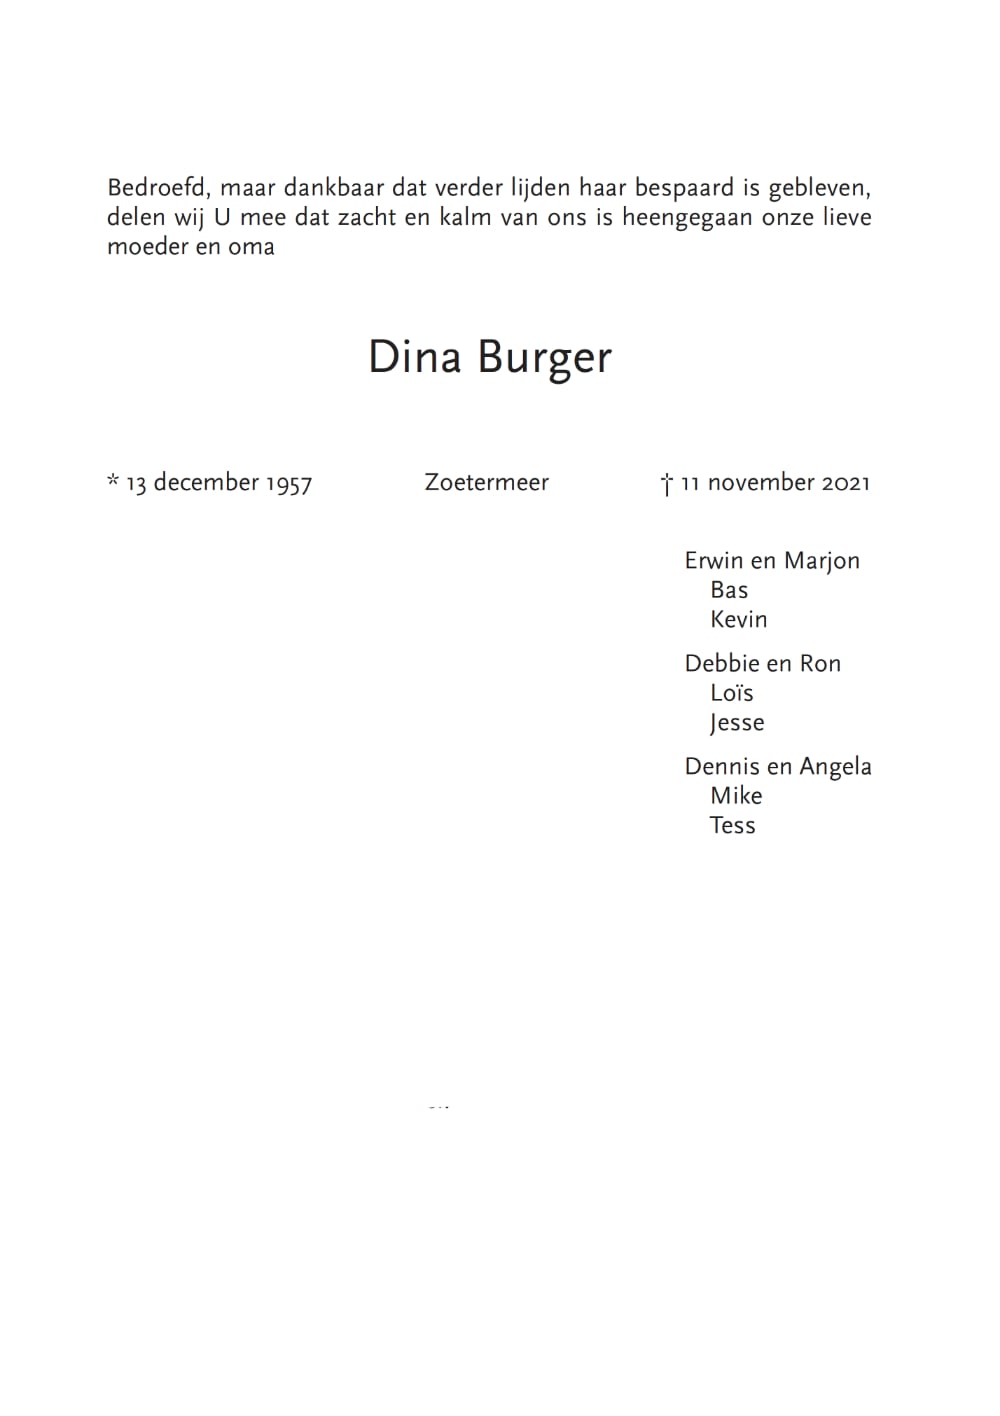 Rouwkaart midden Dina Burger